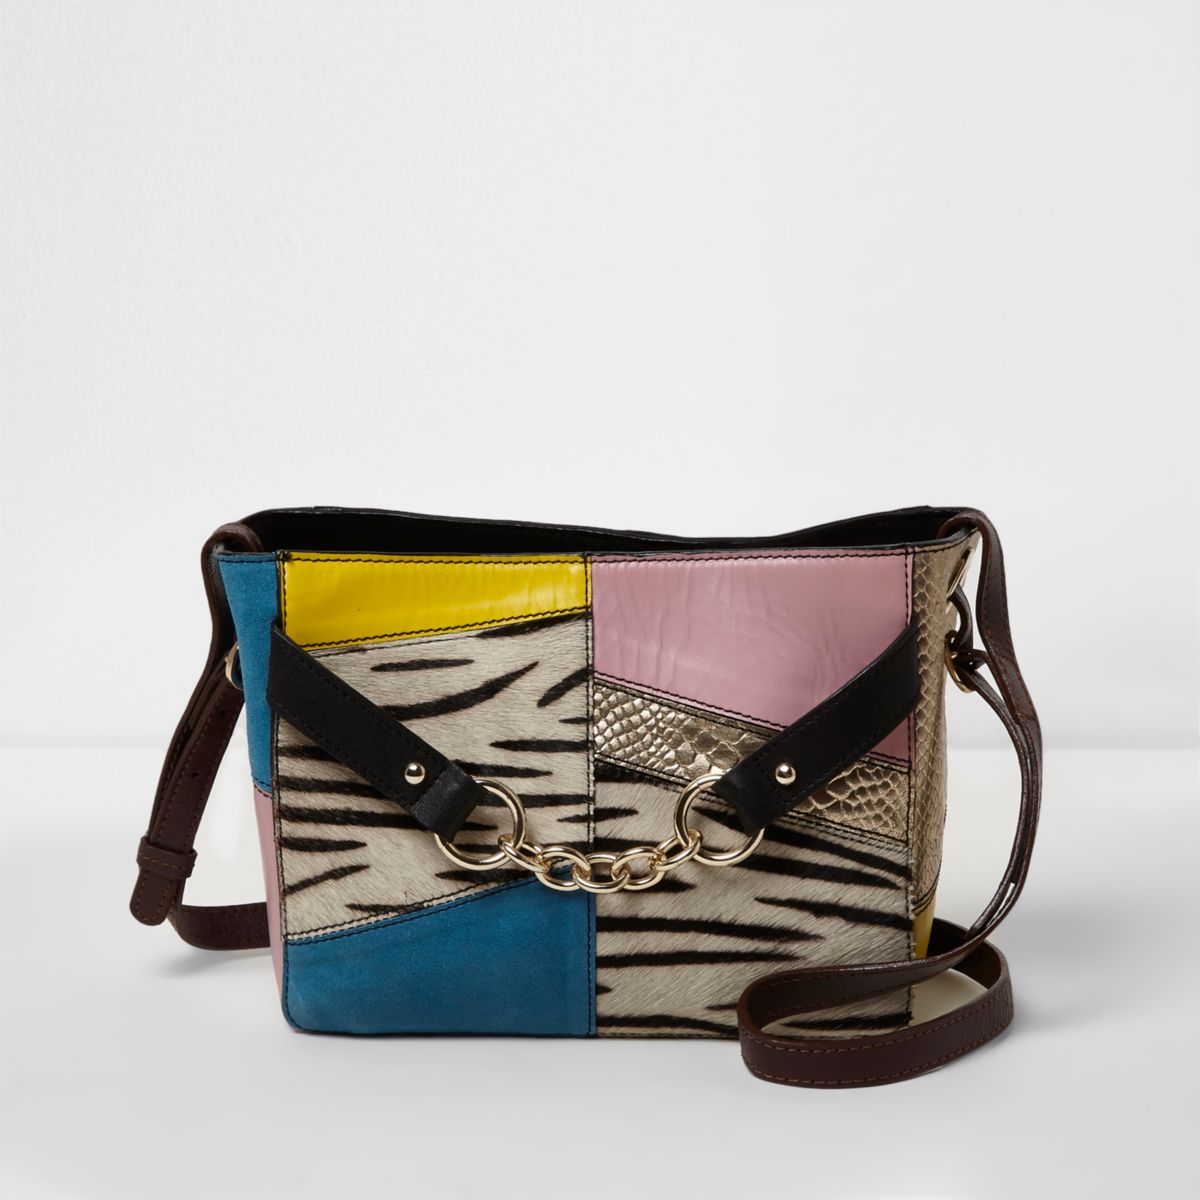 Black cross body zebra print leather bag - Bags & Purses - Sale - women